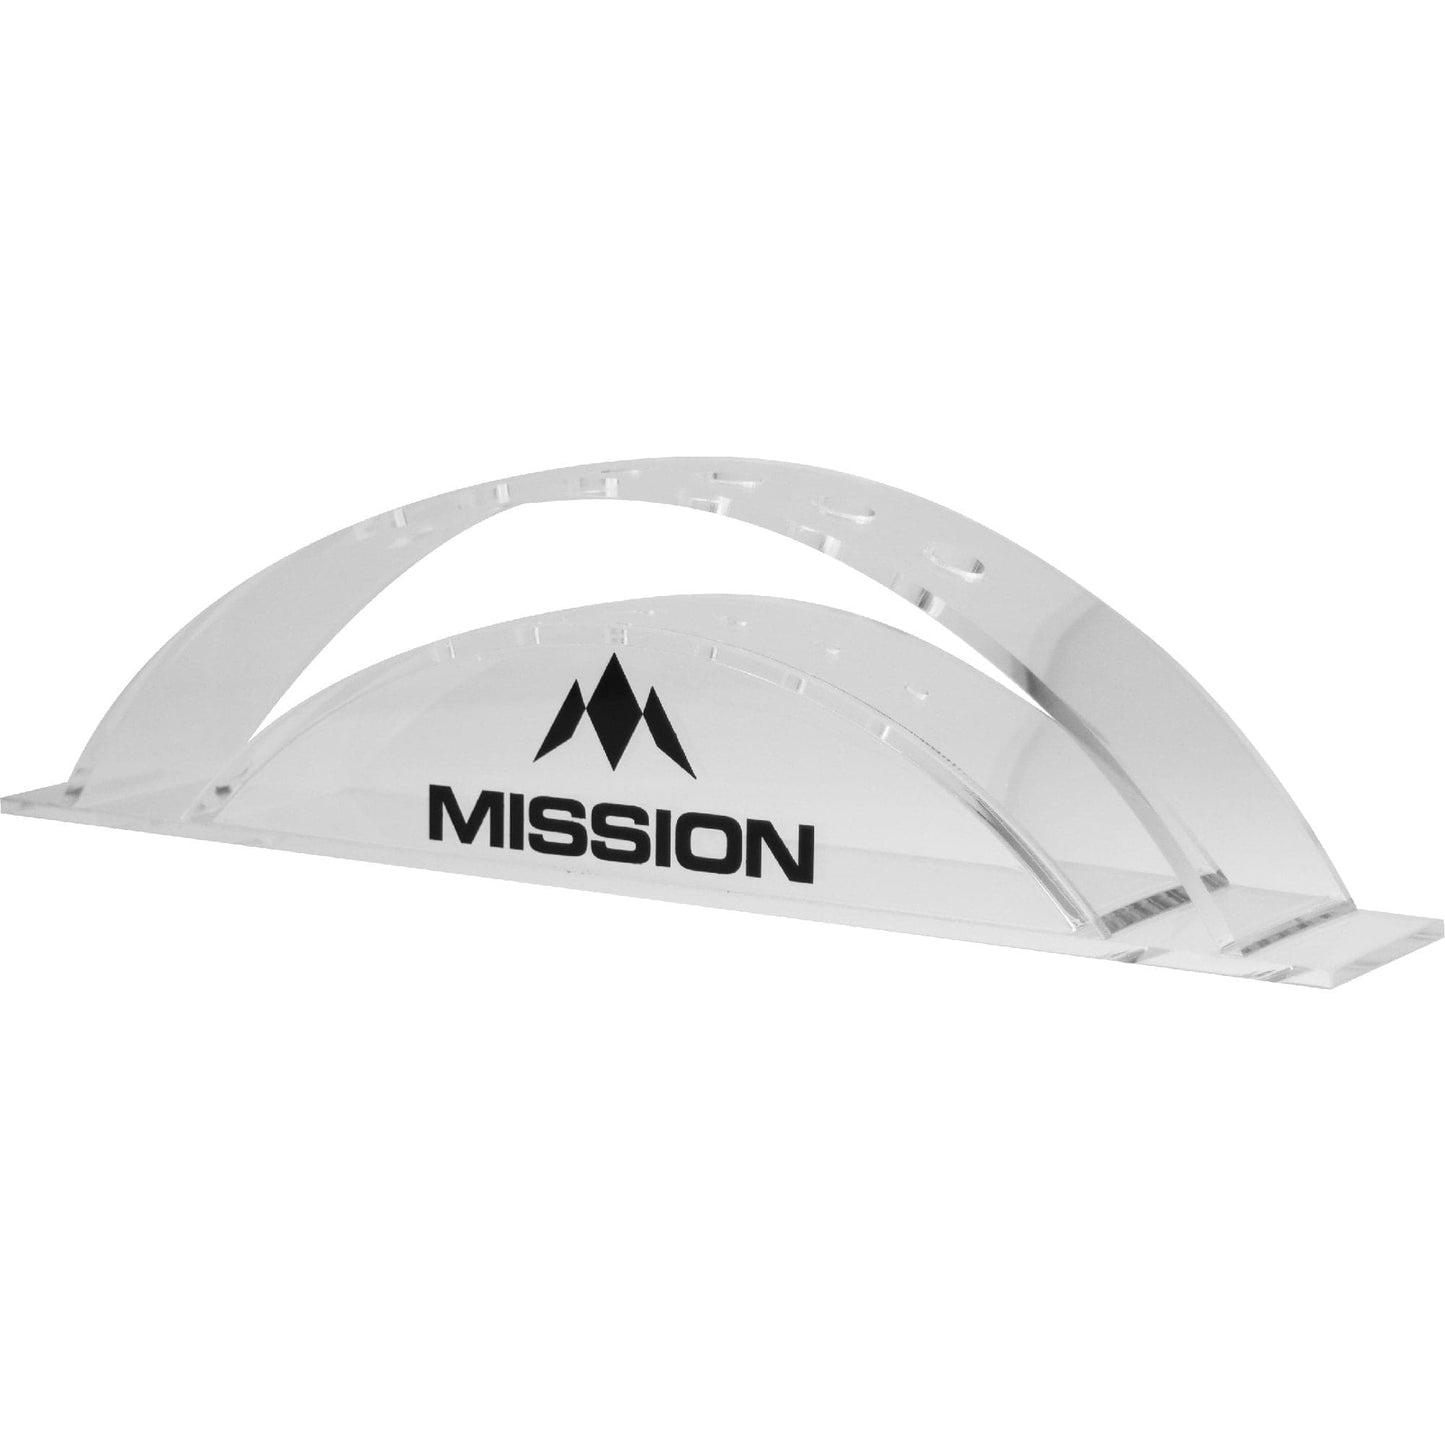 Mission Station 6 - holds 6 darts - Acrylic Darts Display Arc